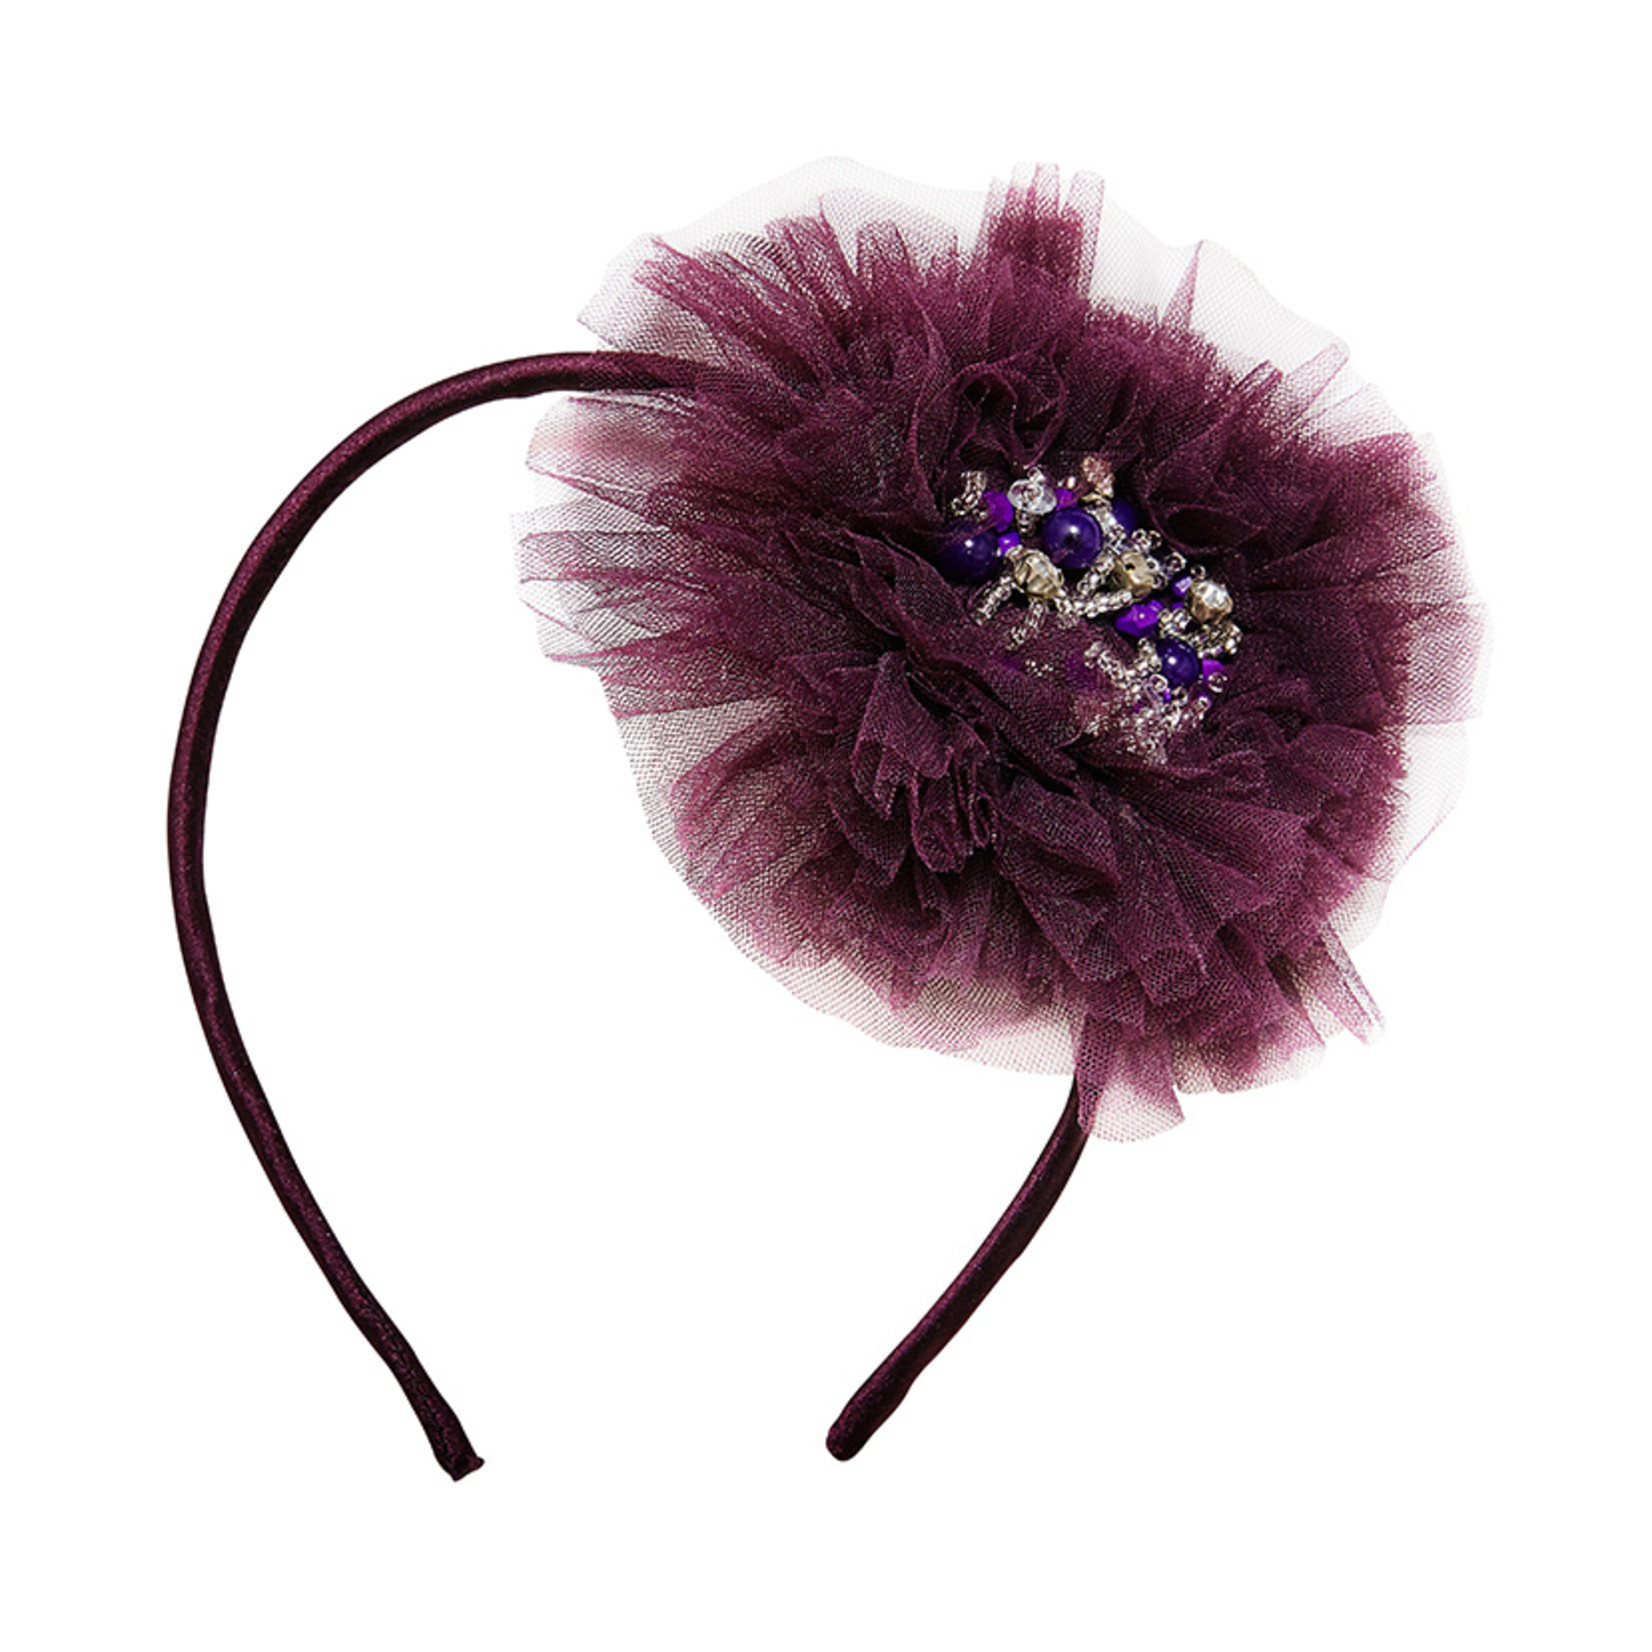 Tutu du Monde Snowgems Headband - Mulberry